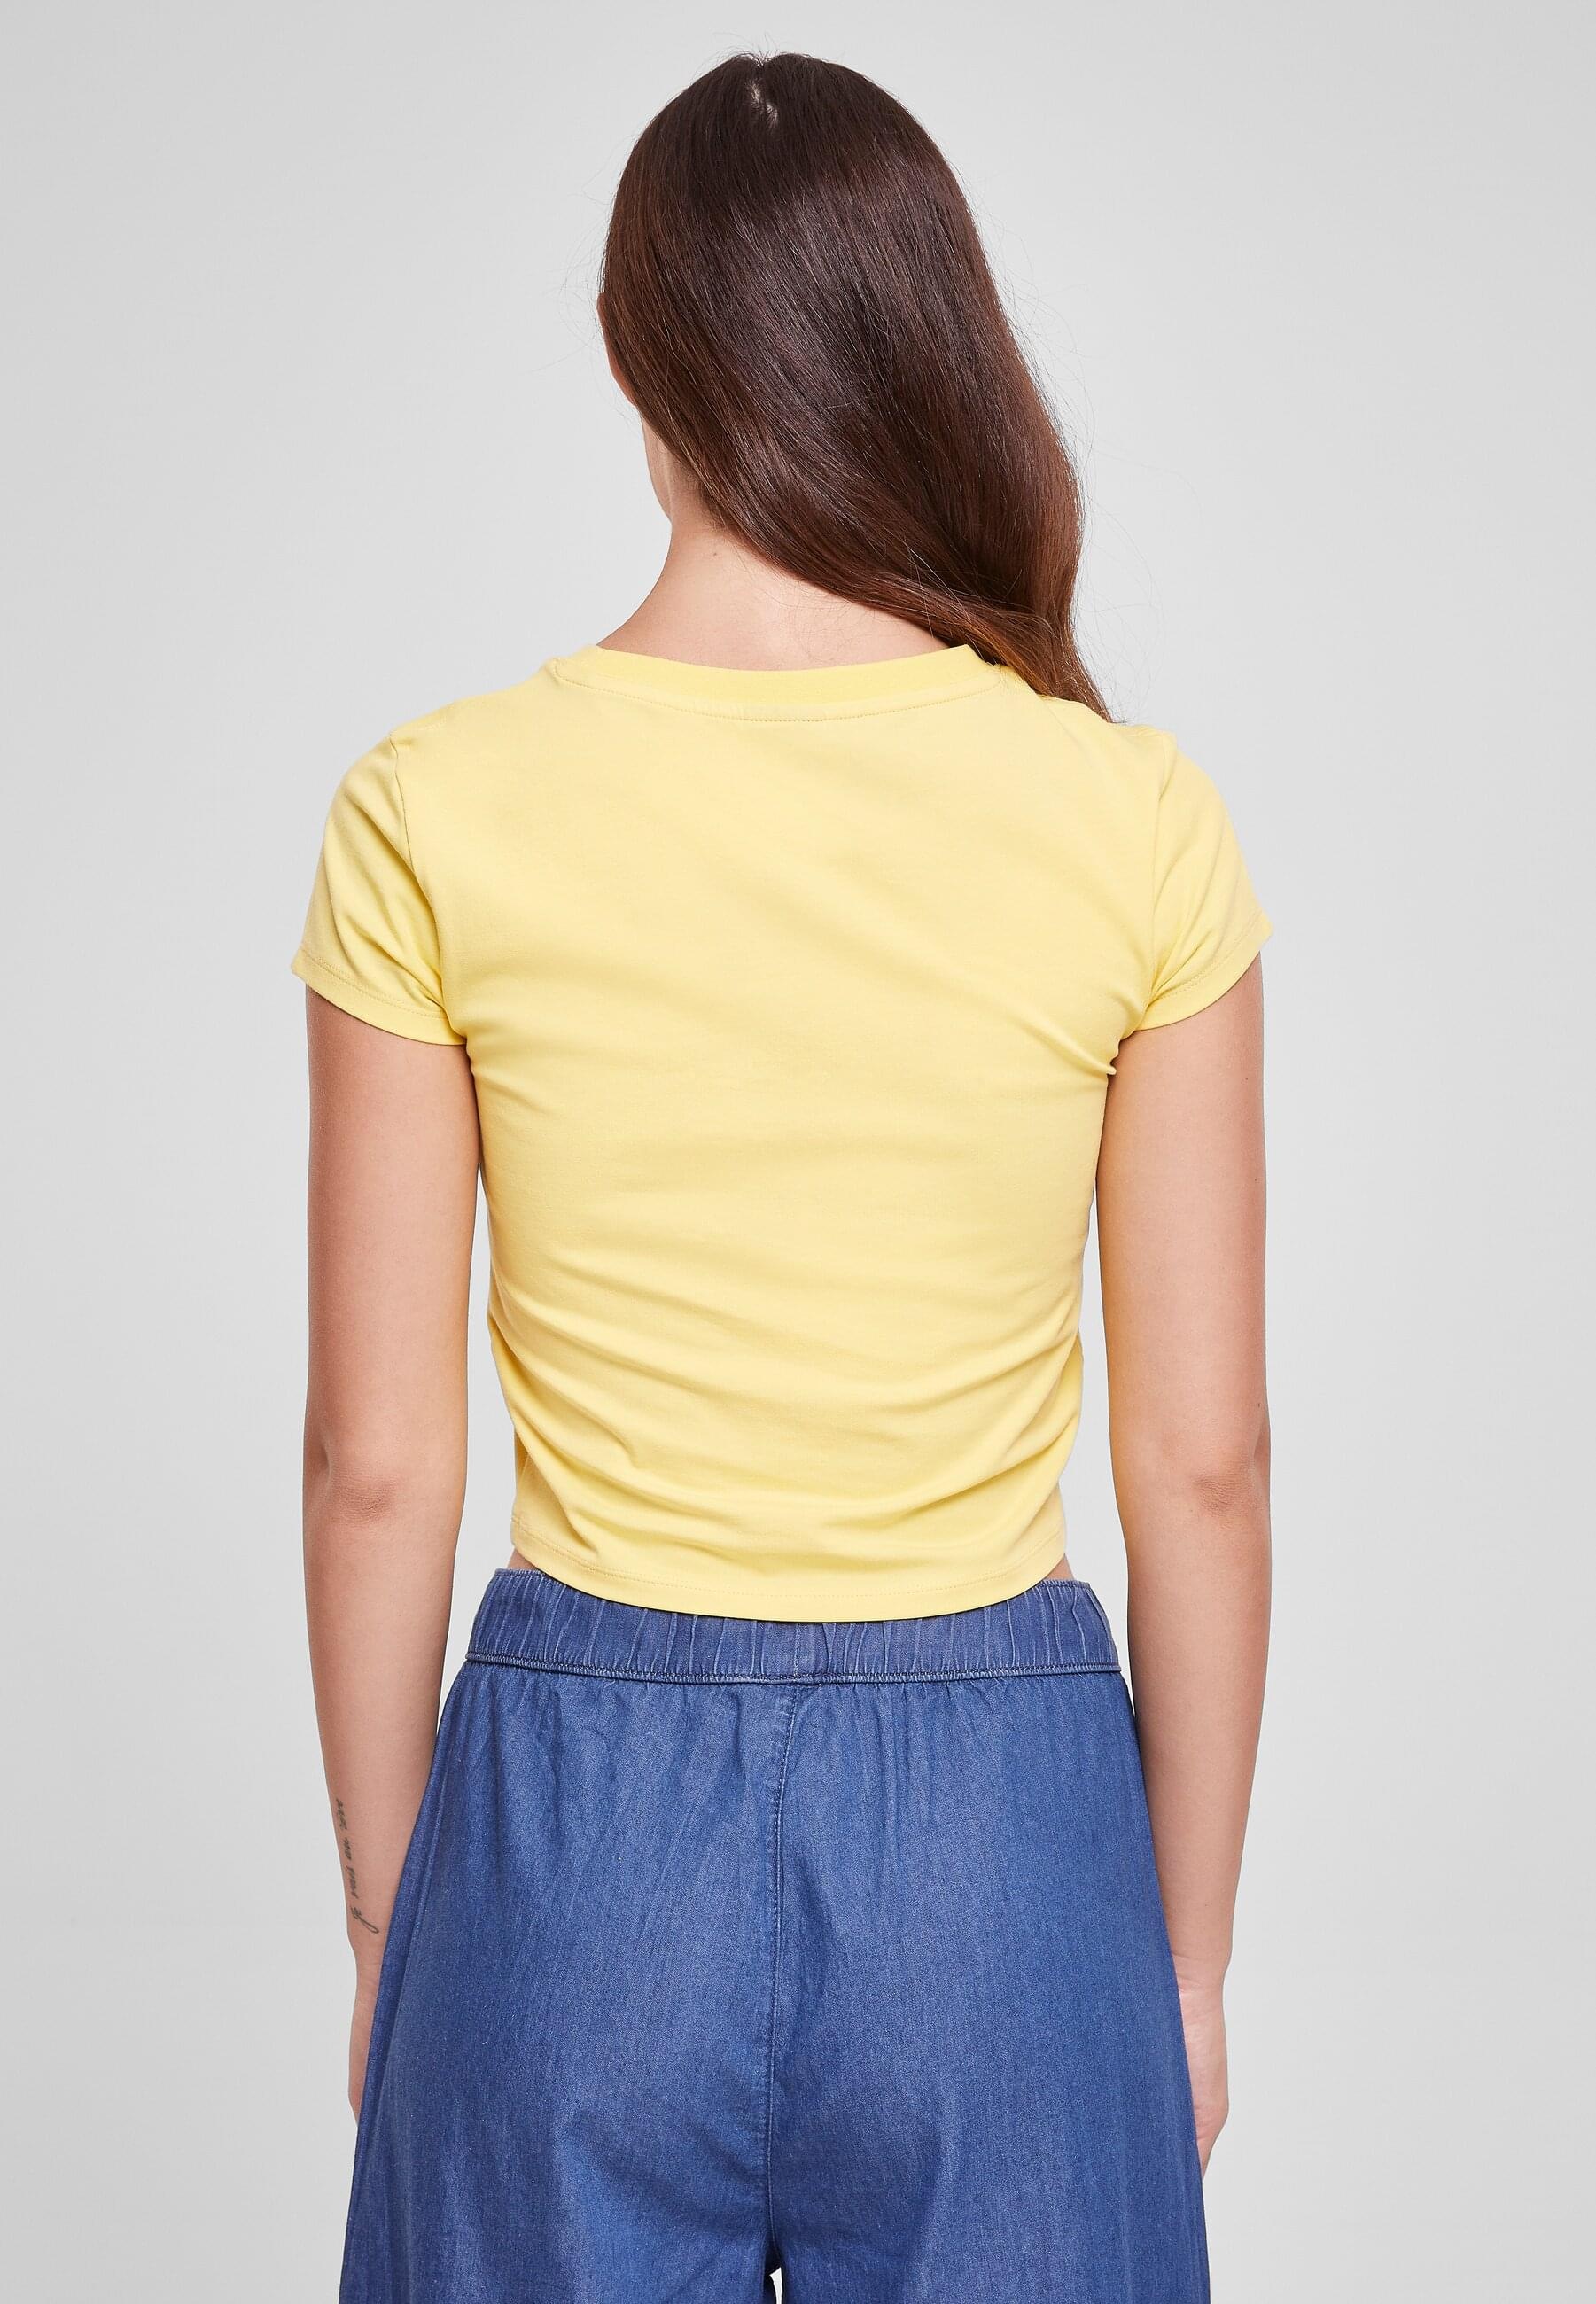 URBAN CLASSICS T-Shirt »Urban Classics Damen Ladies Stretch Jersey Cropped Tee«, (1 tlg.)